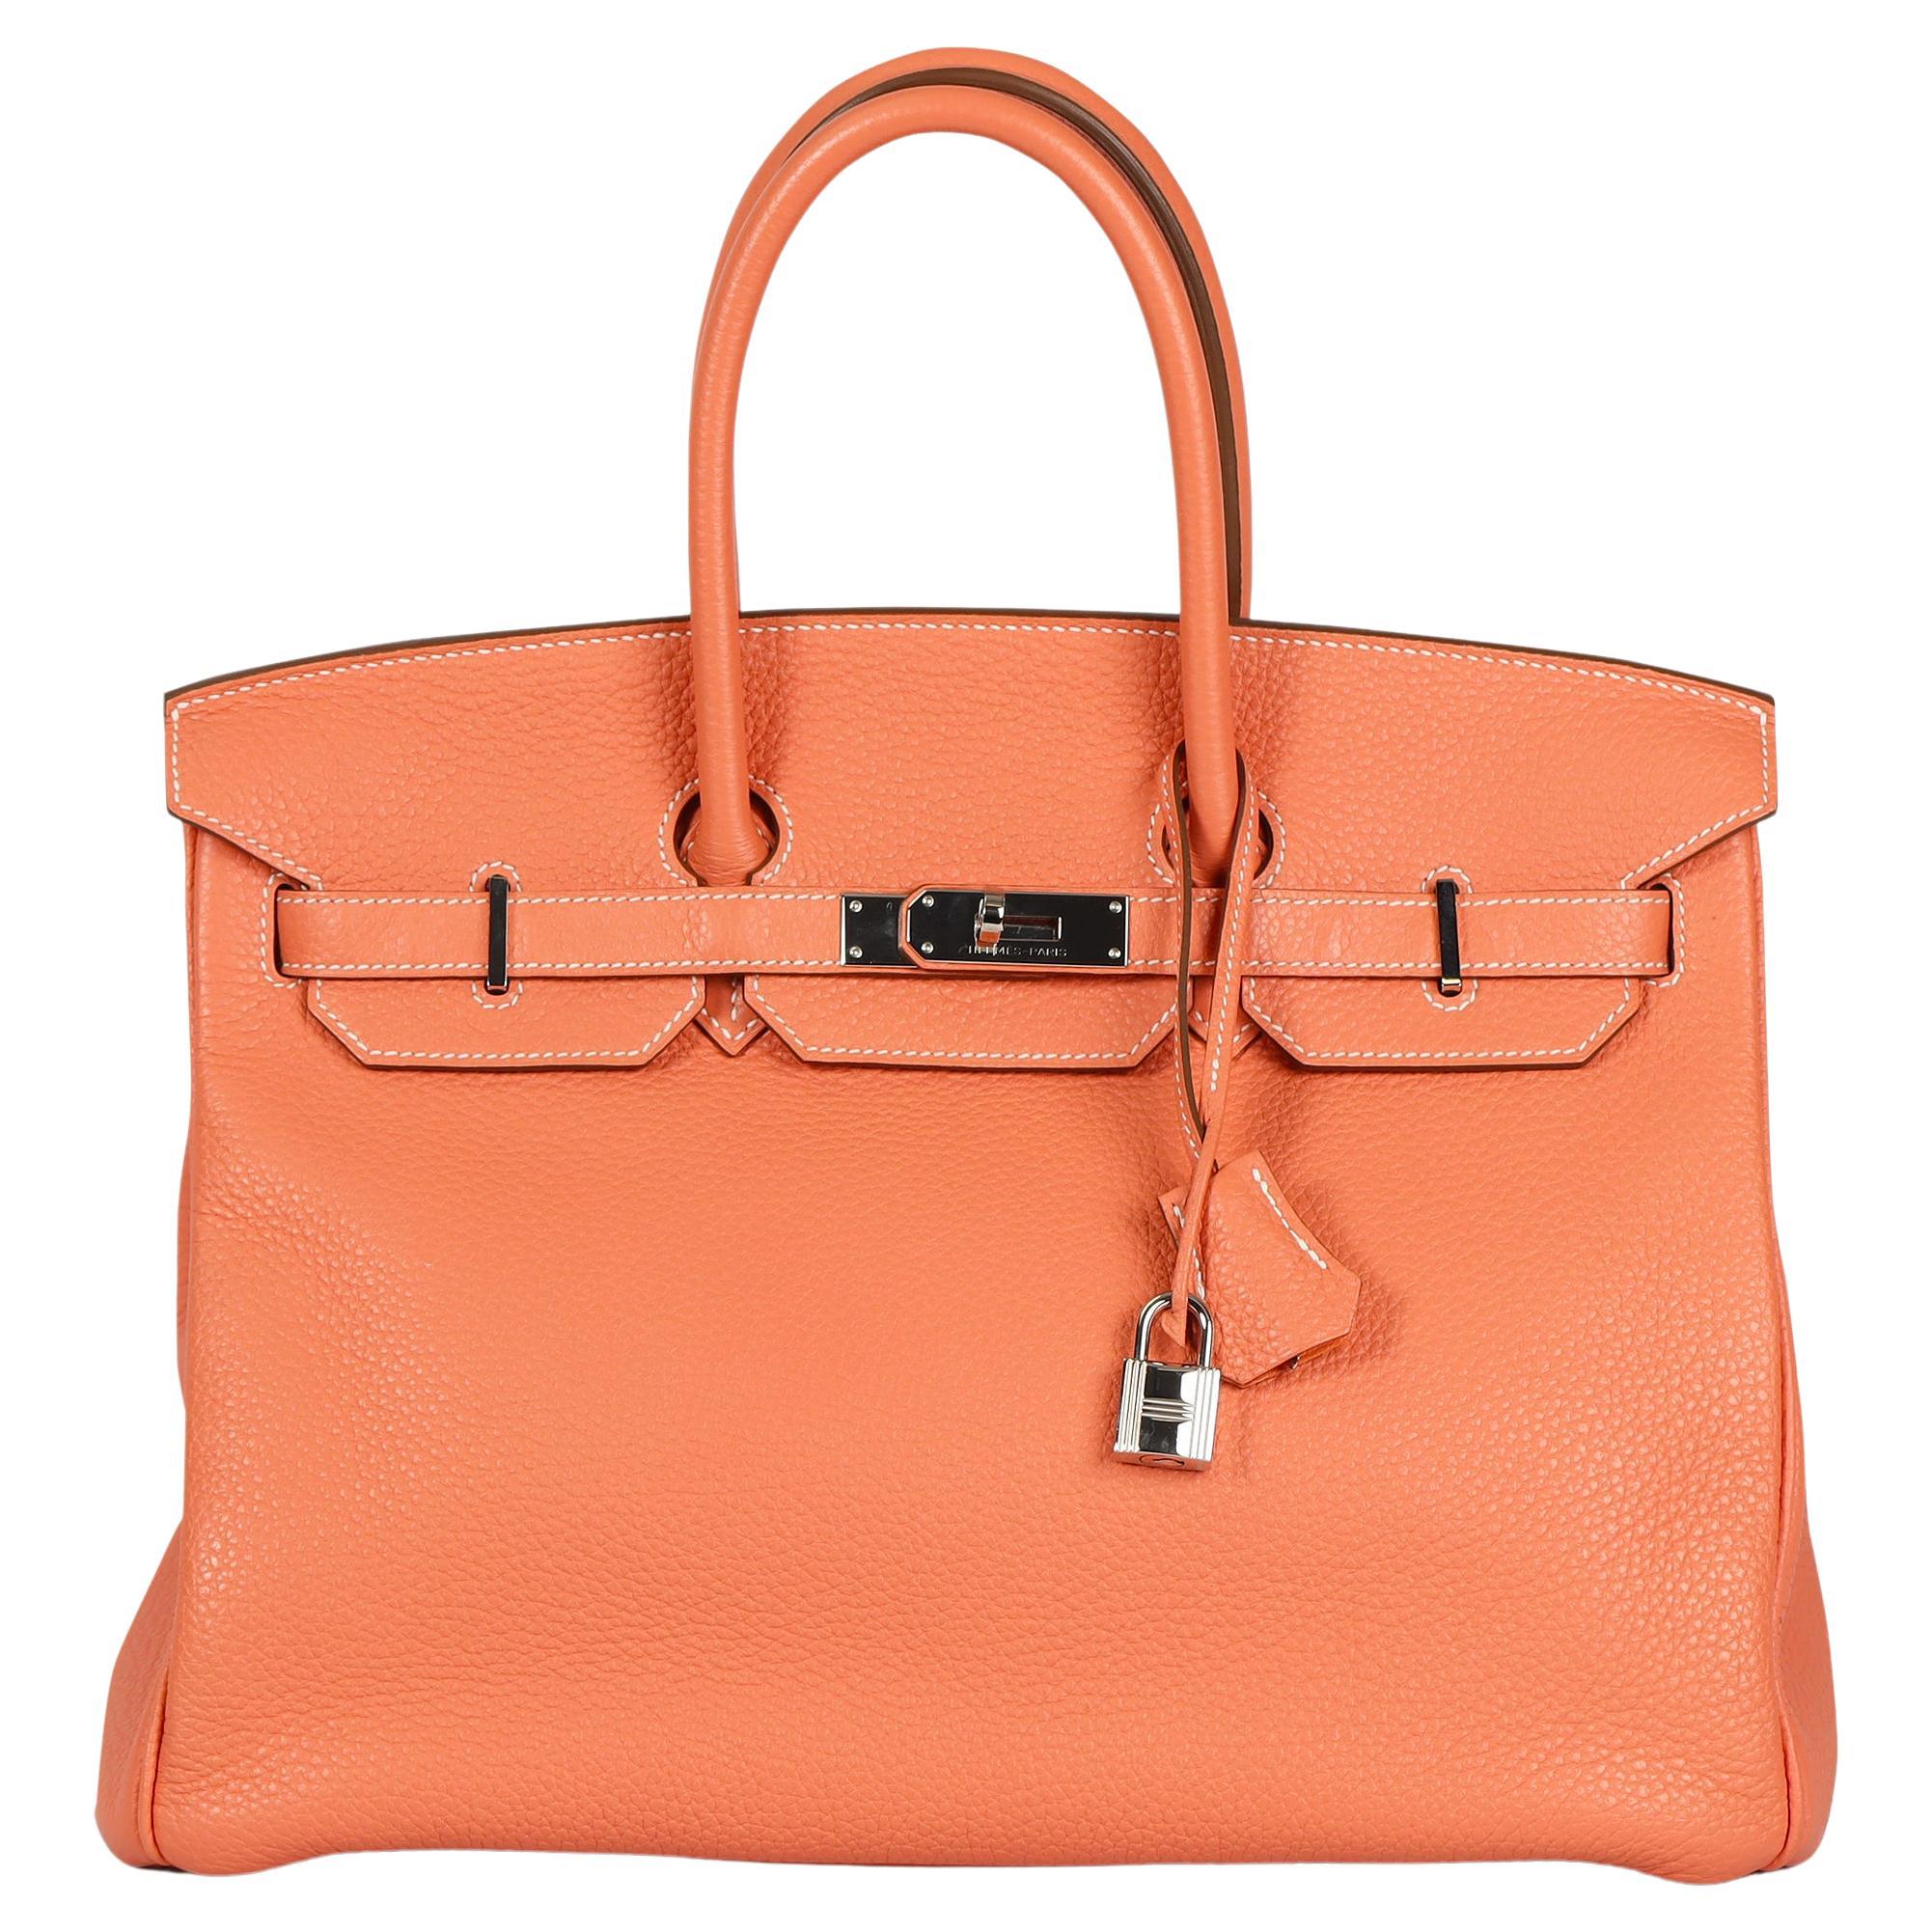 Hermès 2013 Birkin 35cm Clemence Leather Bag For Sale